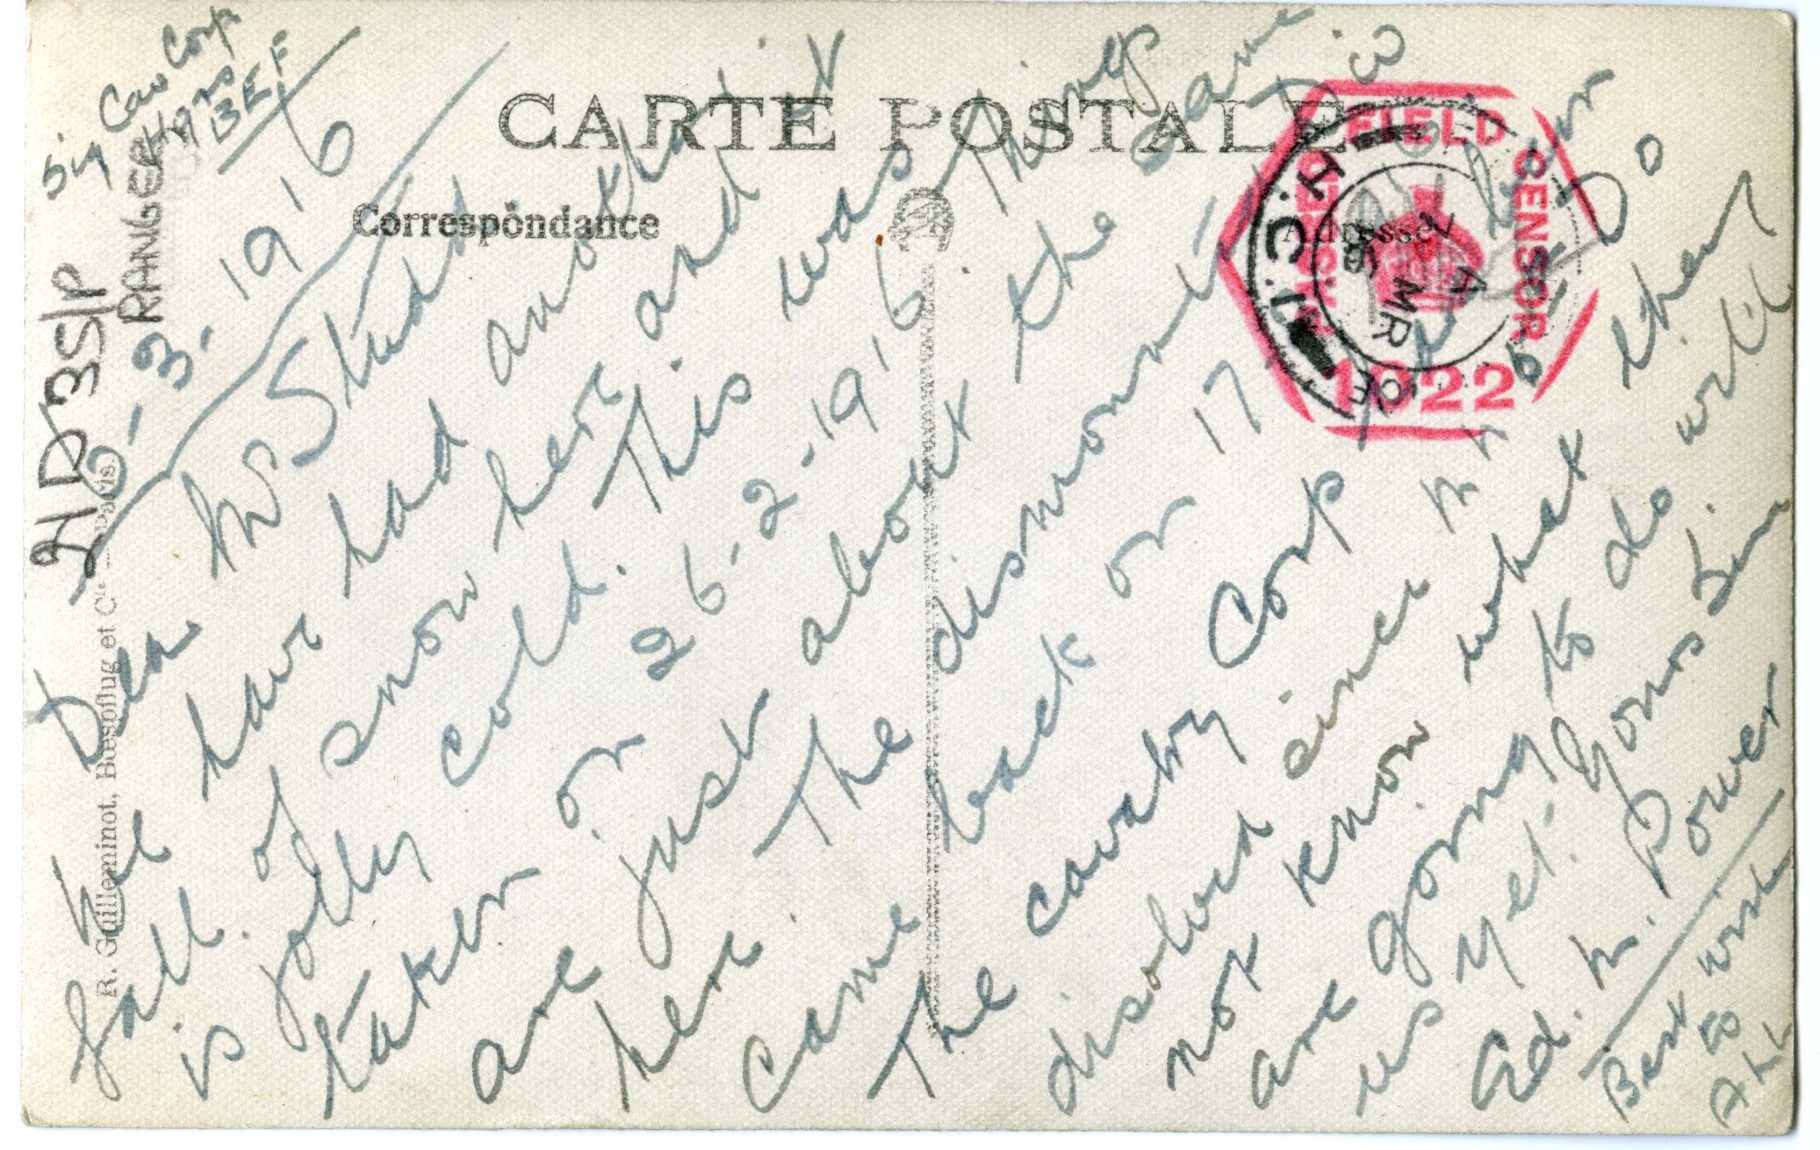 A postcard sent home by Edward Power, February 1916